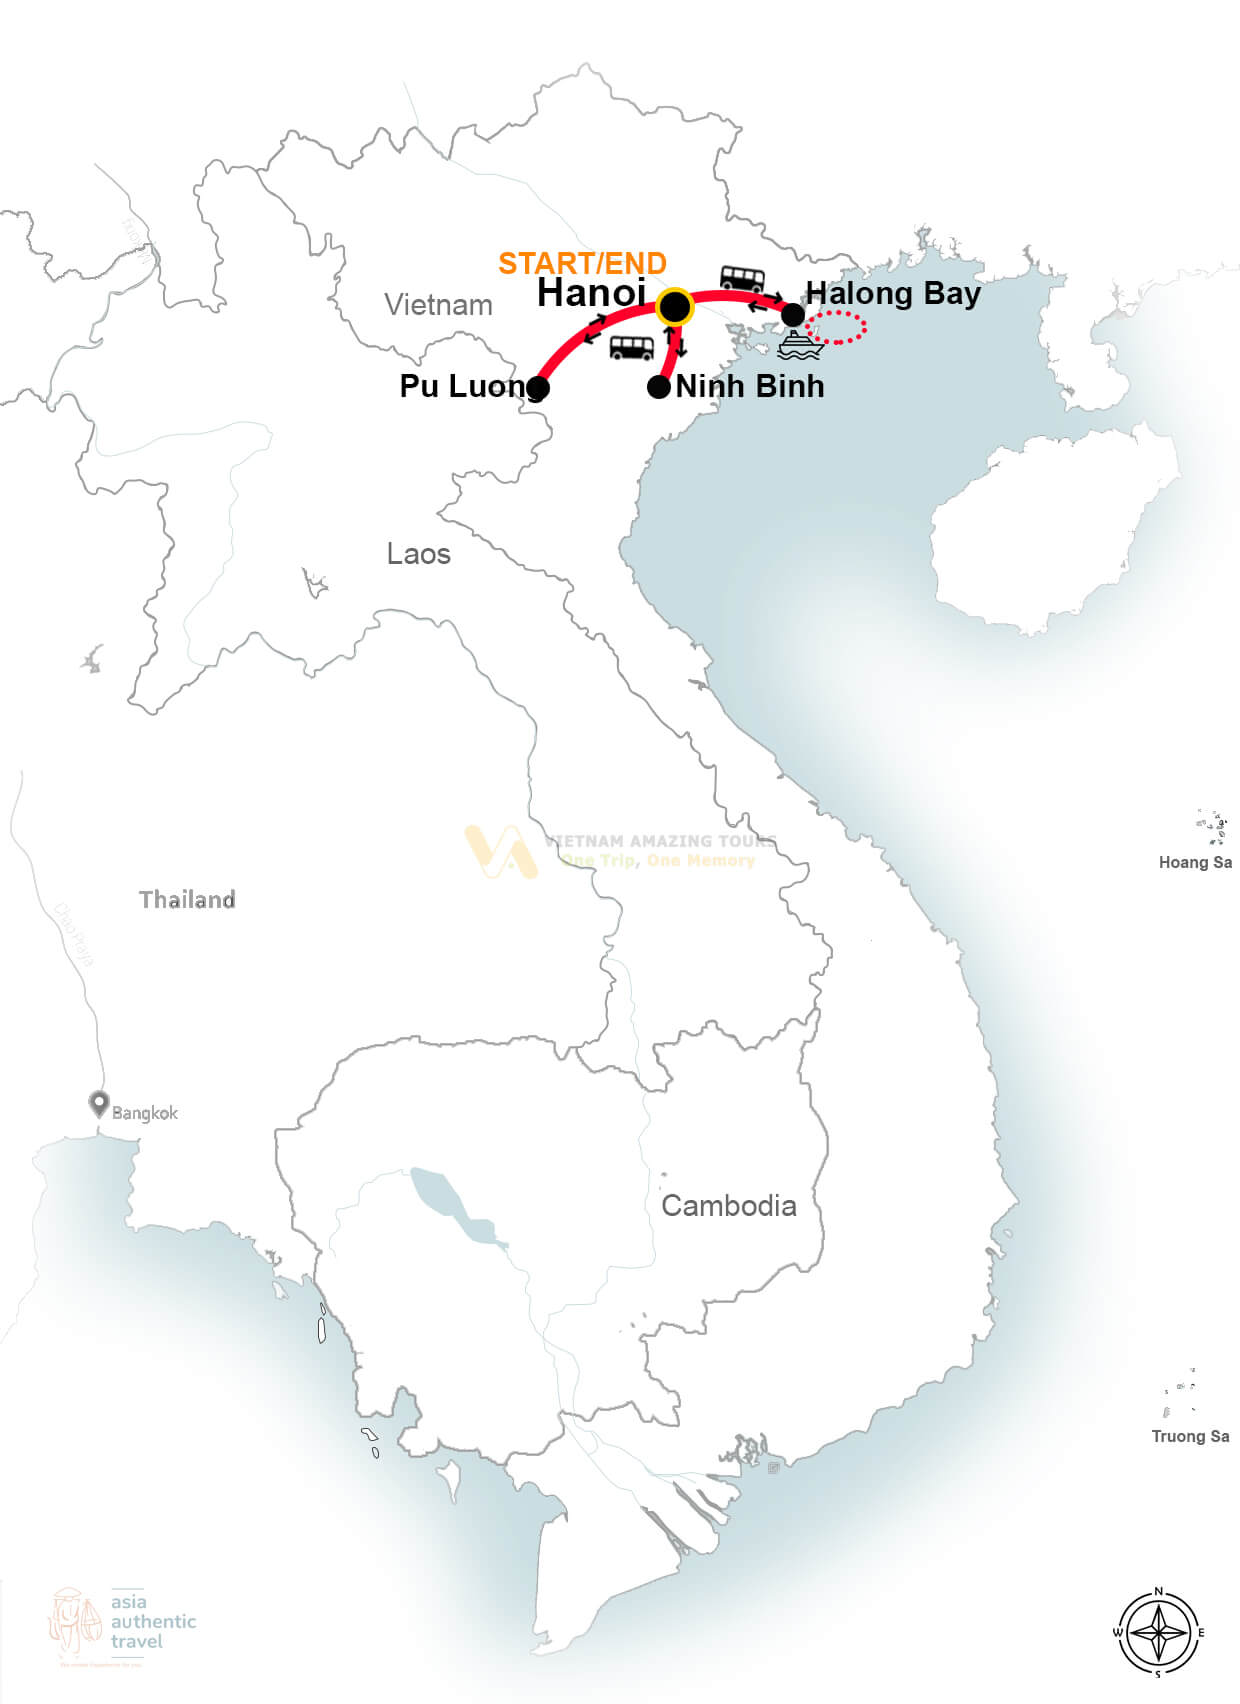 /uploads/the-beauty-northern-vietnam-tour-7-day-trip-map.jpeg